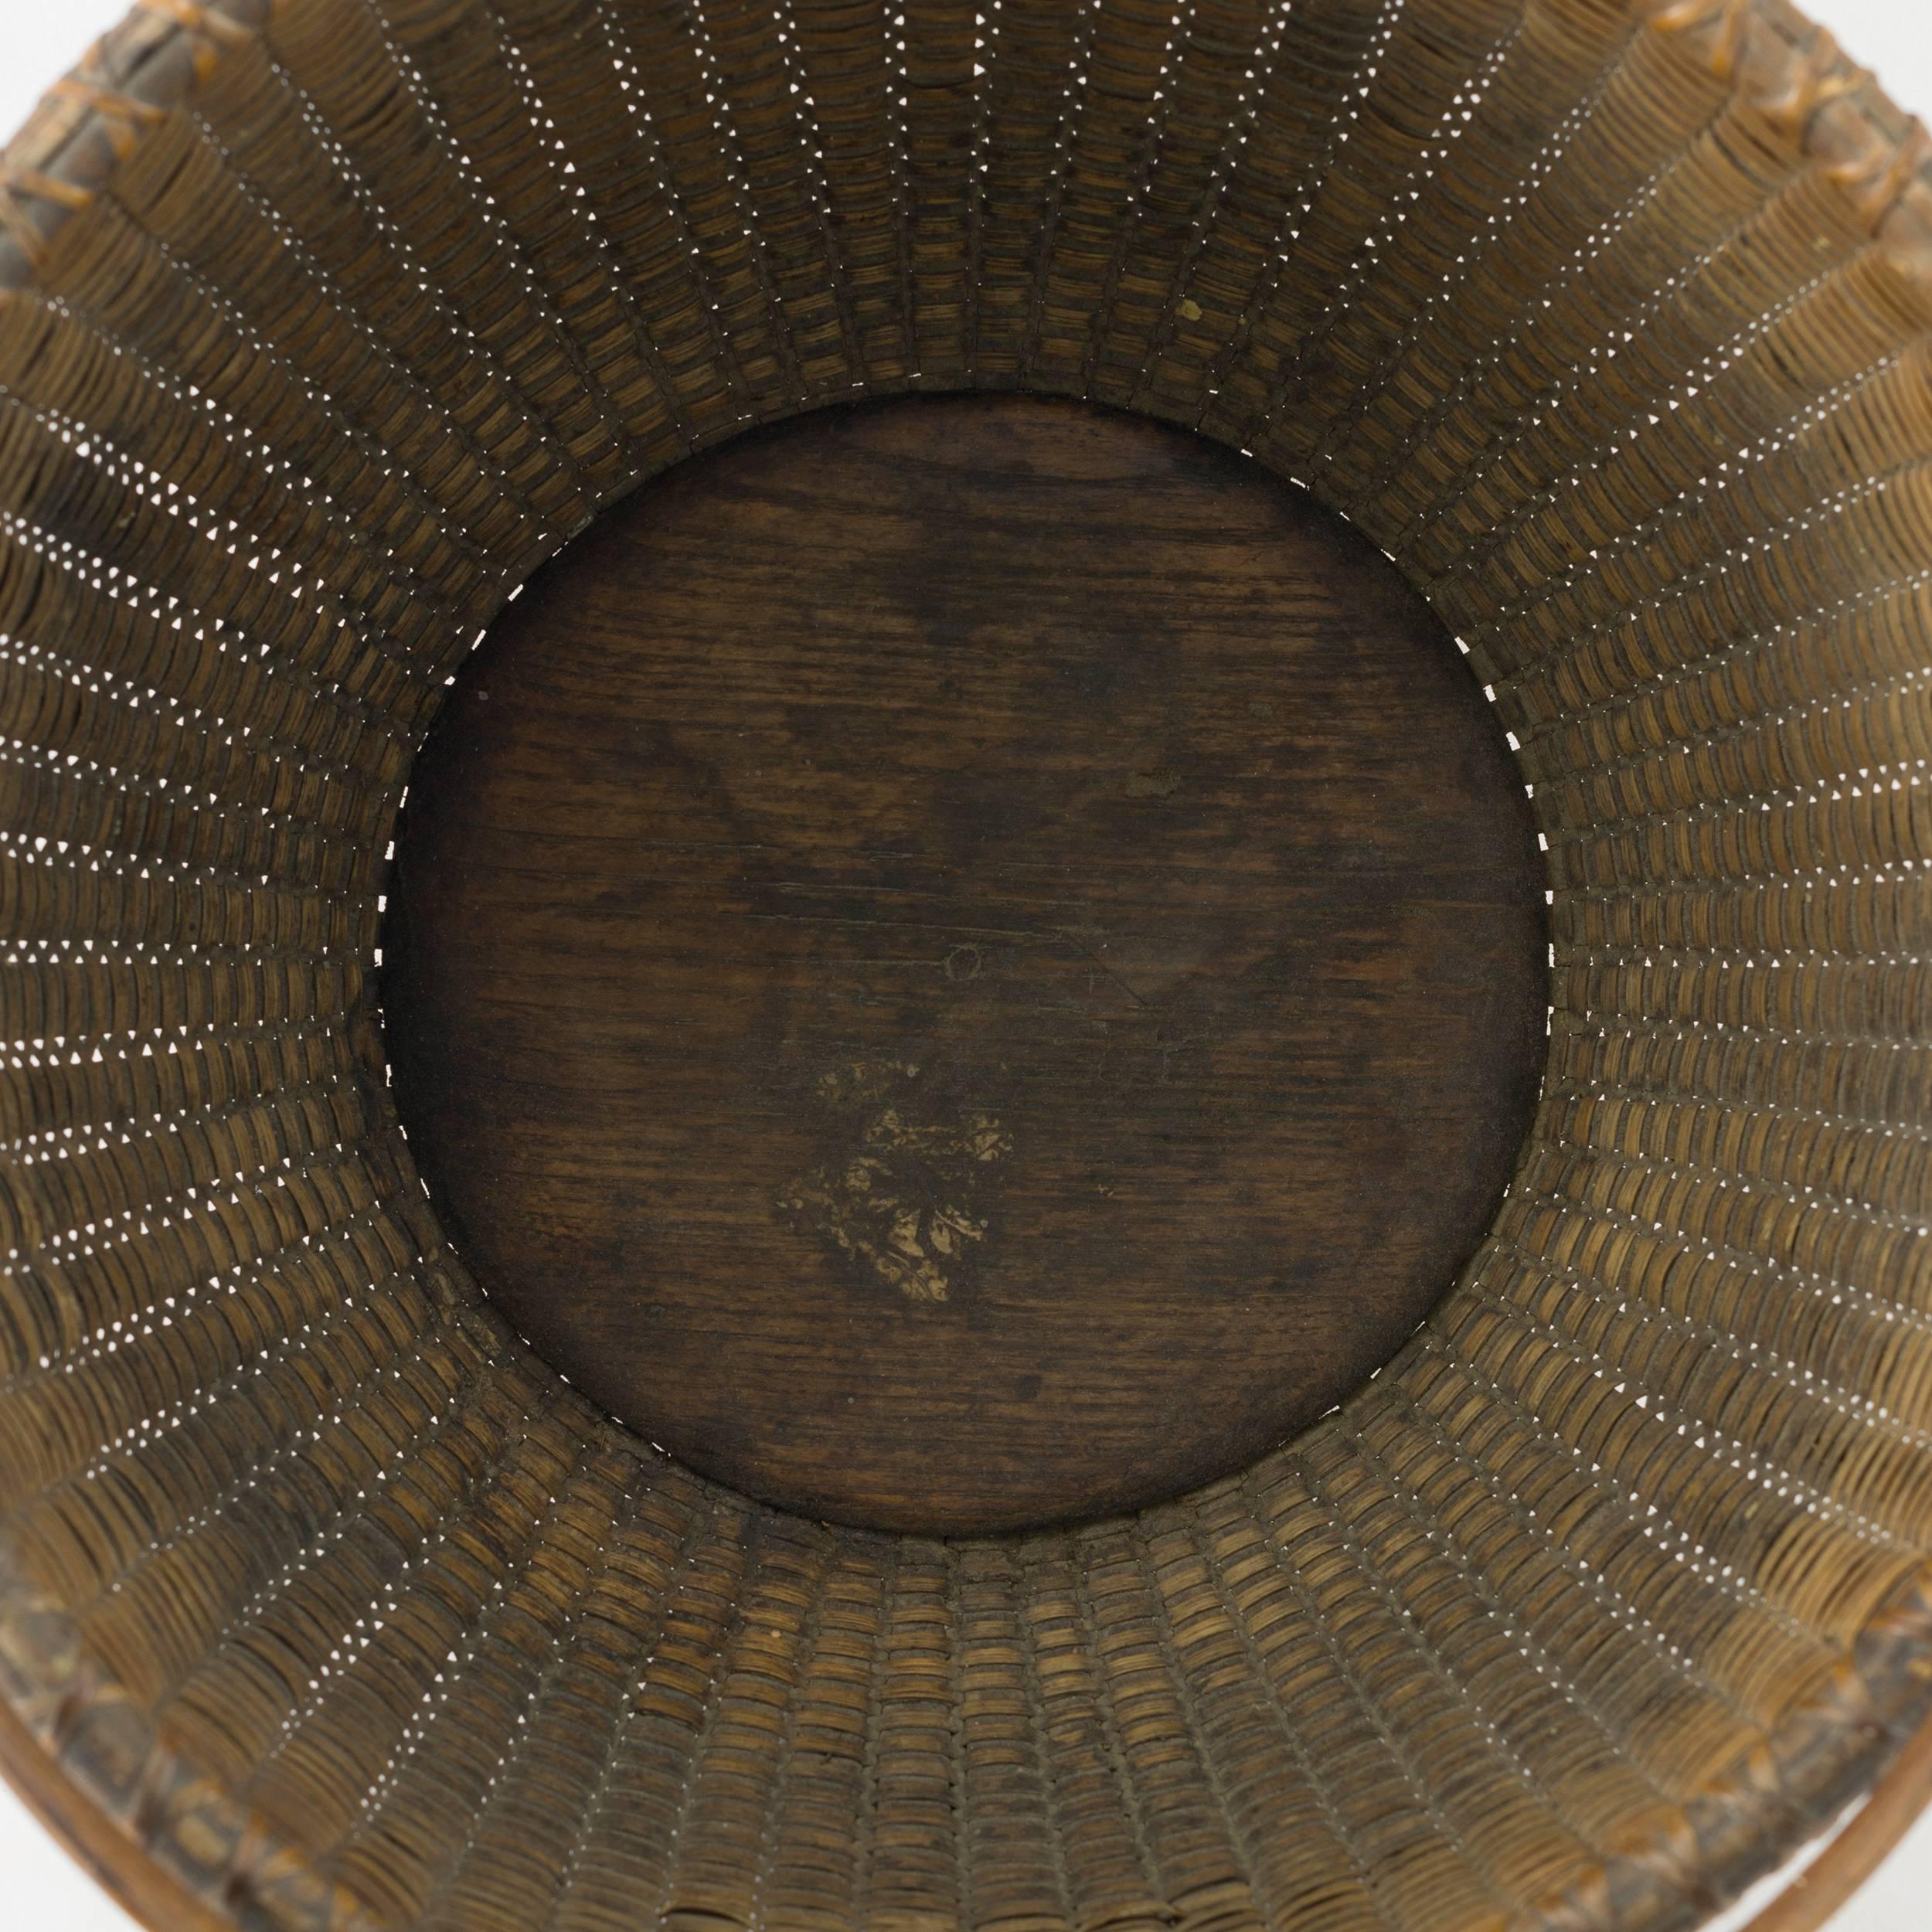 Open Round Nantucket Lightship Basket Made by Capt. James Wyer 1